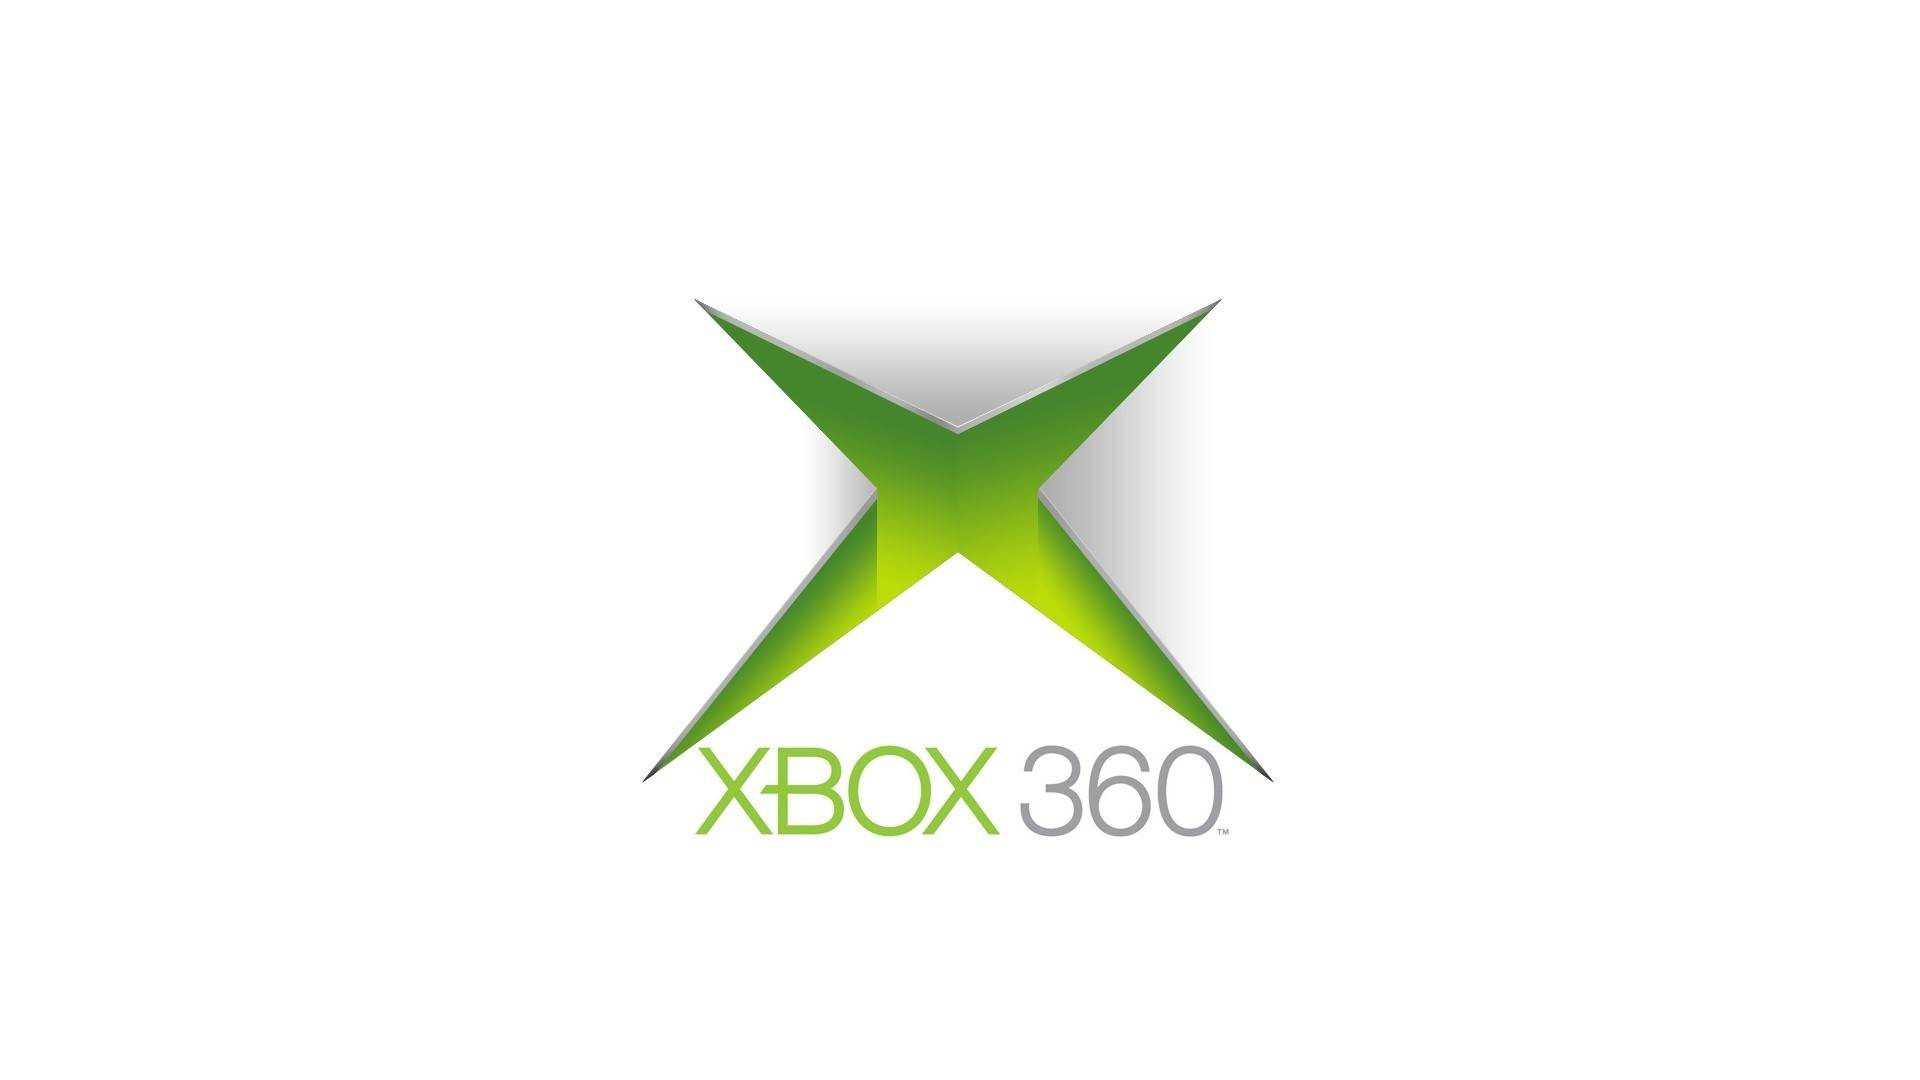 Xbox 360 19201080 Wallpaper 1684672